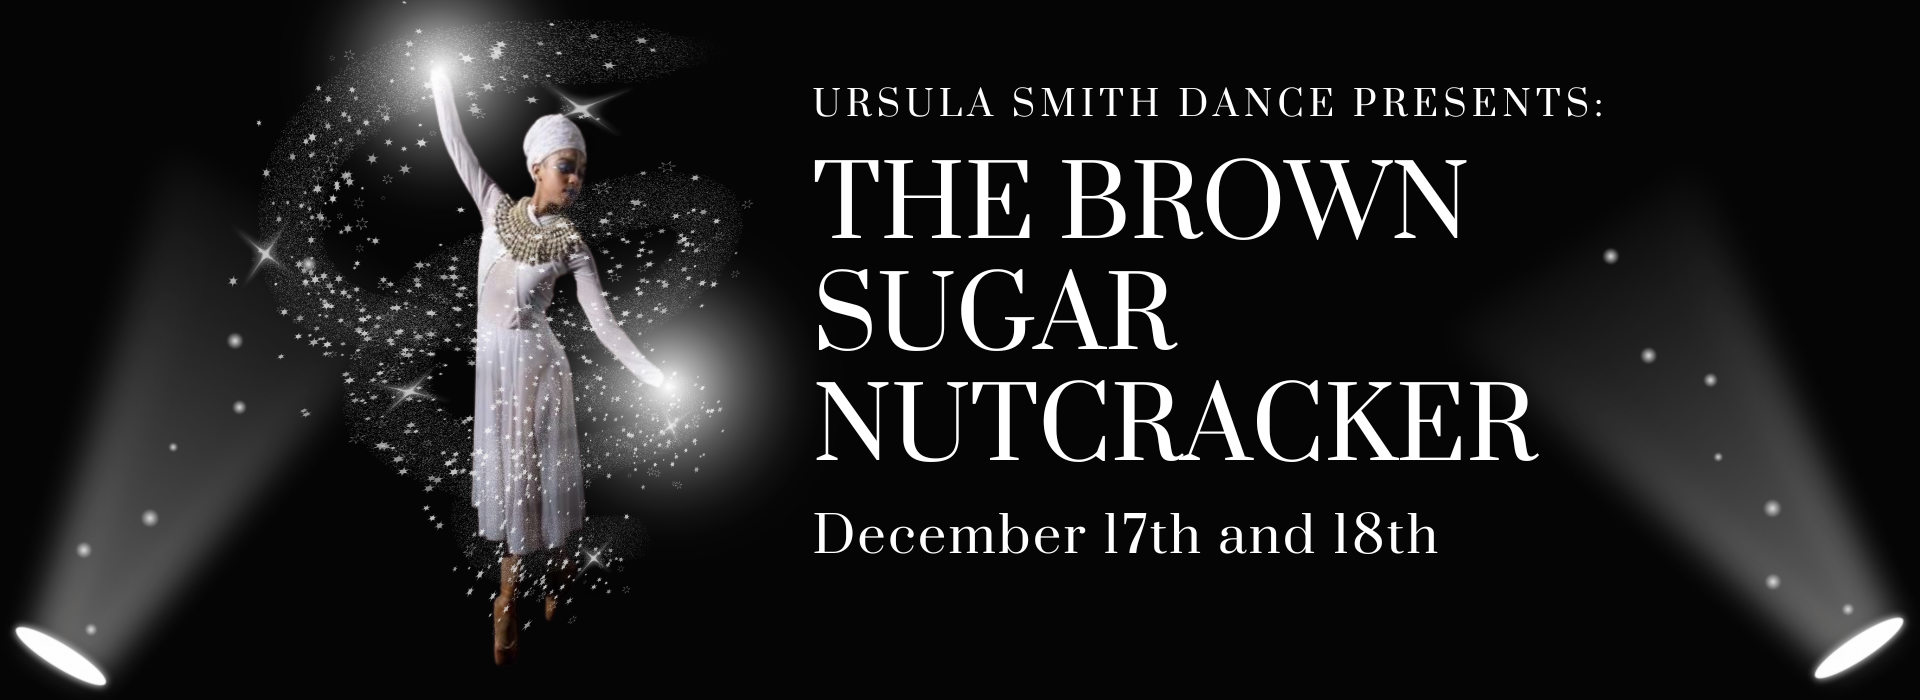 Ursula Smith Dance Presents: The Brown Sugar Nutcracker